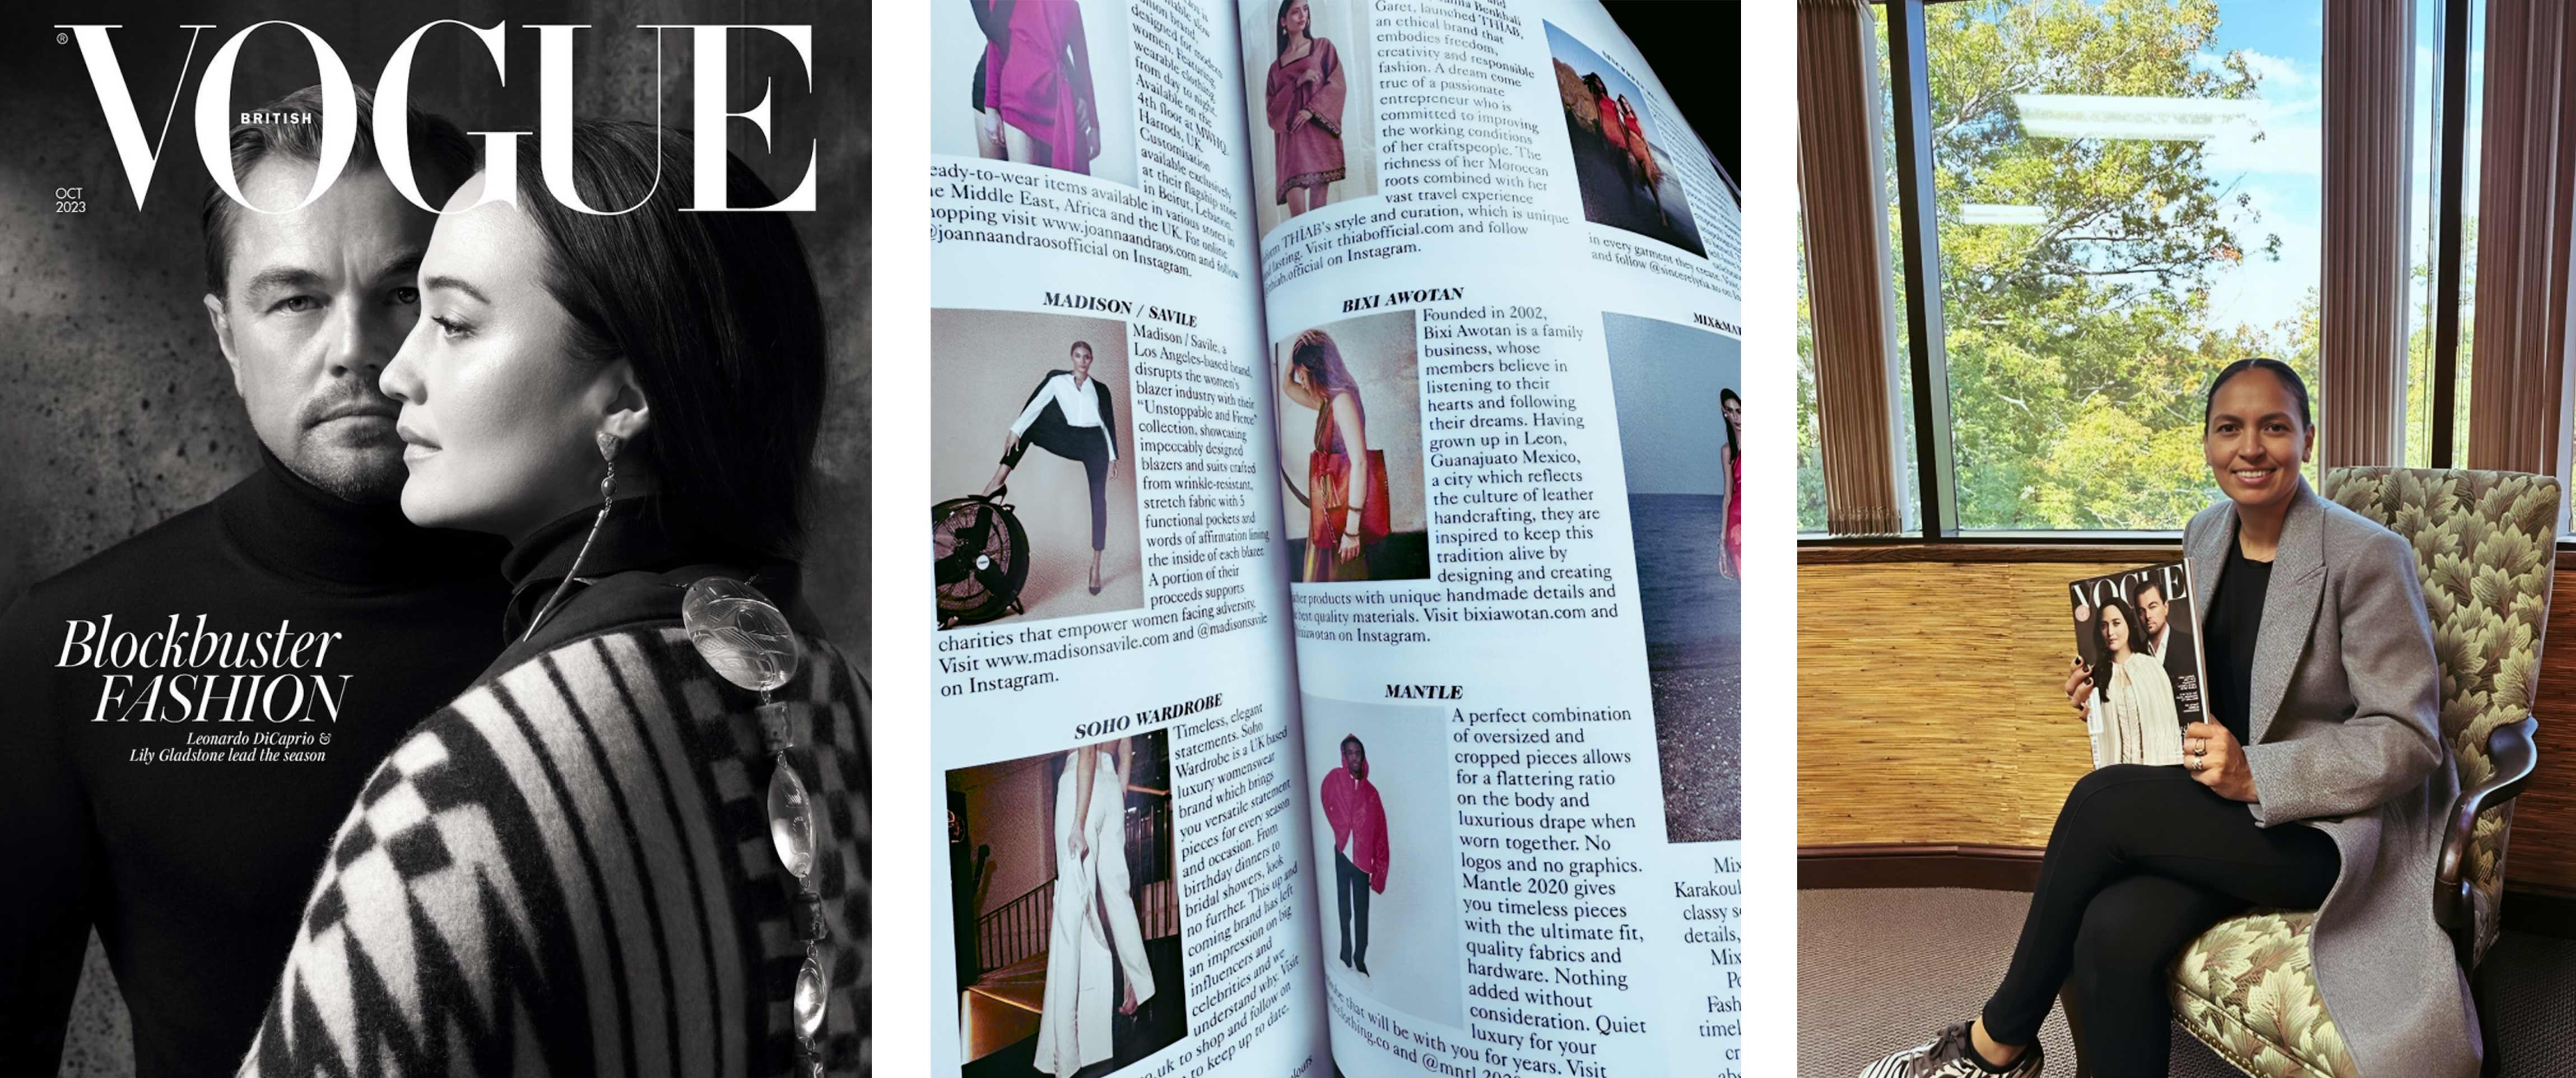 Dreams Come True: Bixi Awotan Featured in British Vogue